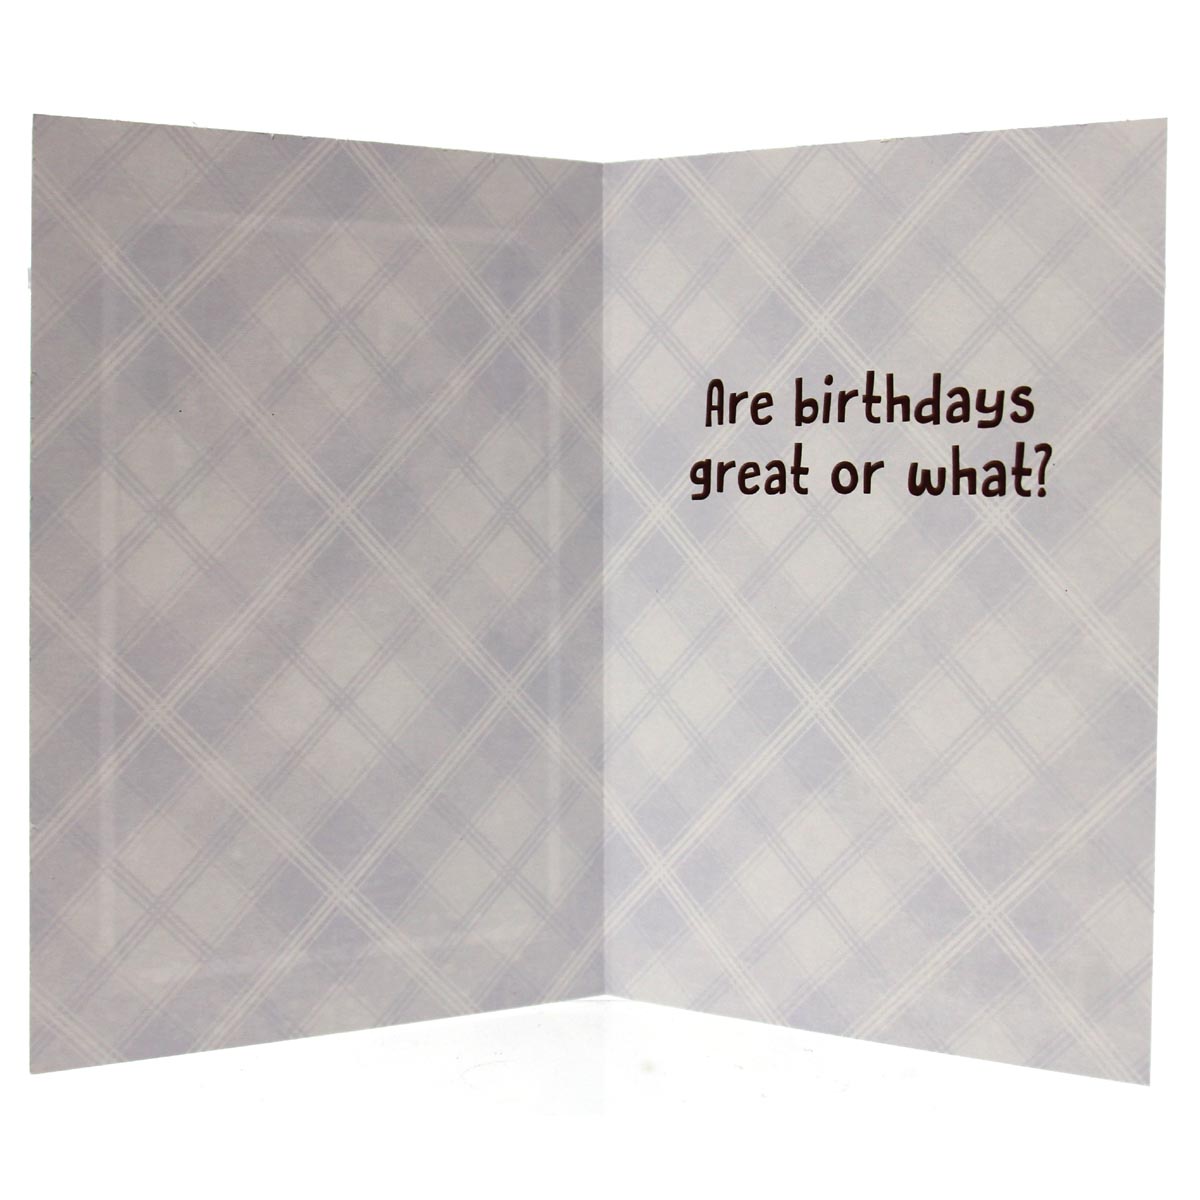 Birthday Card - Are birthdays great...